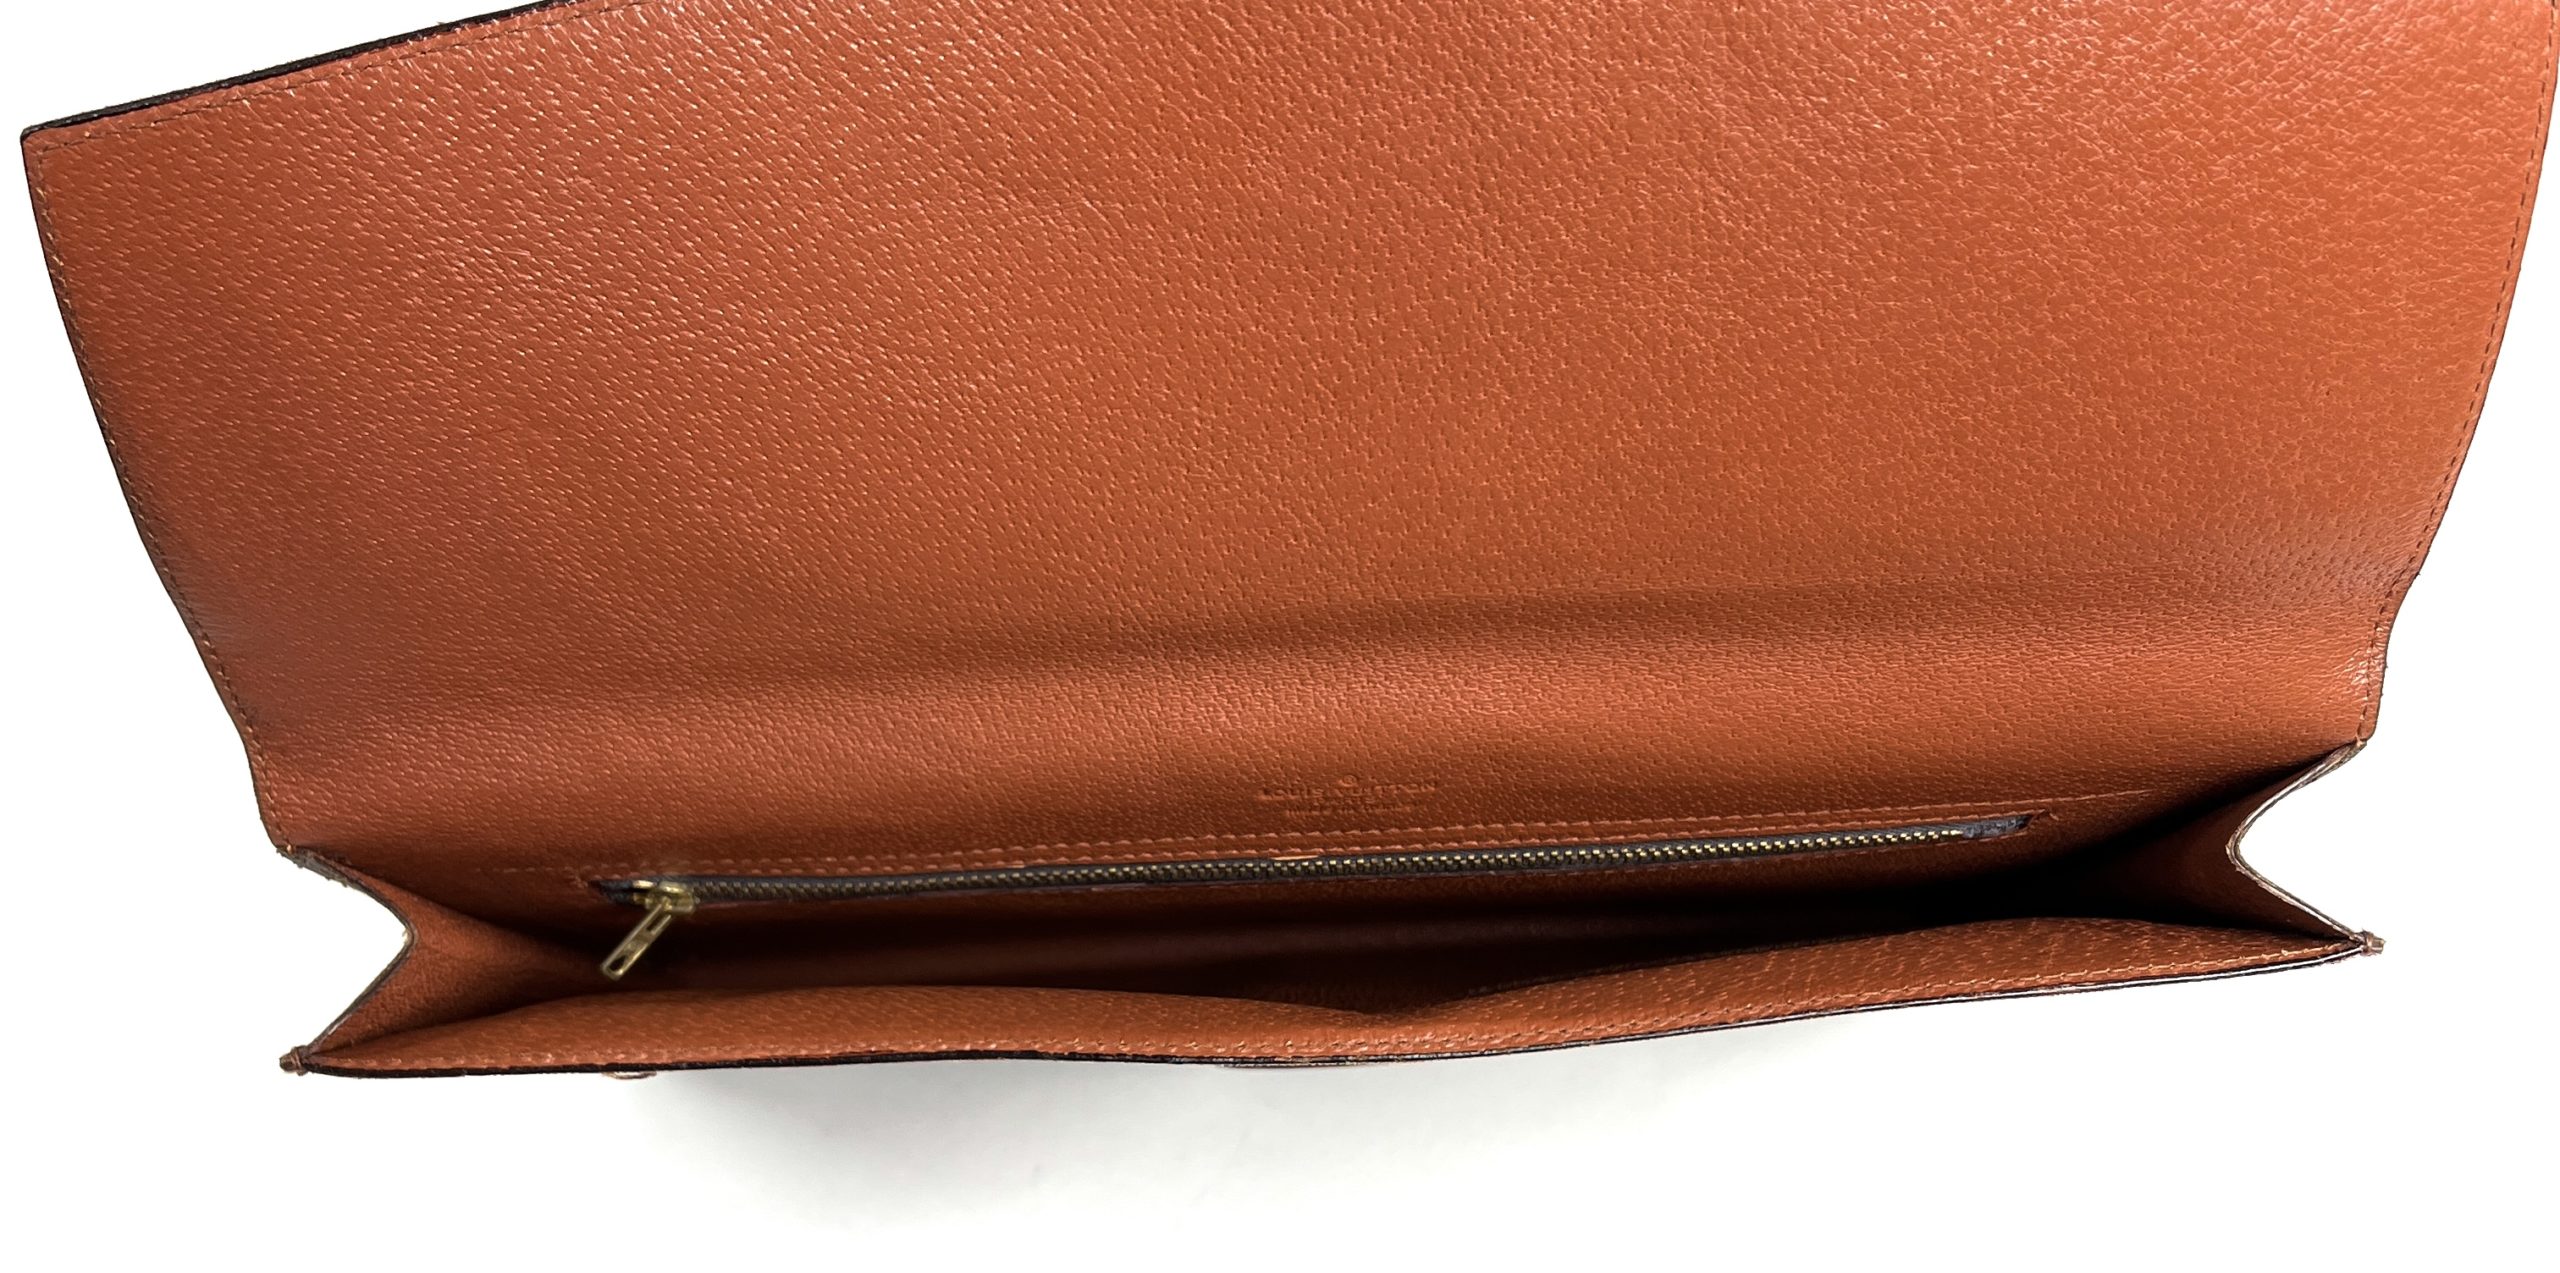 Louis Vuitton Envelope Clutch Handbags